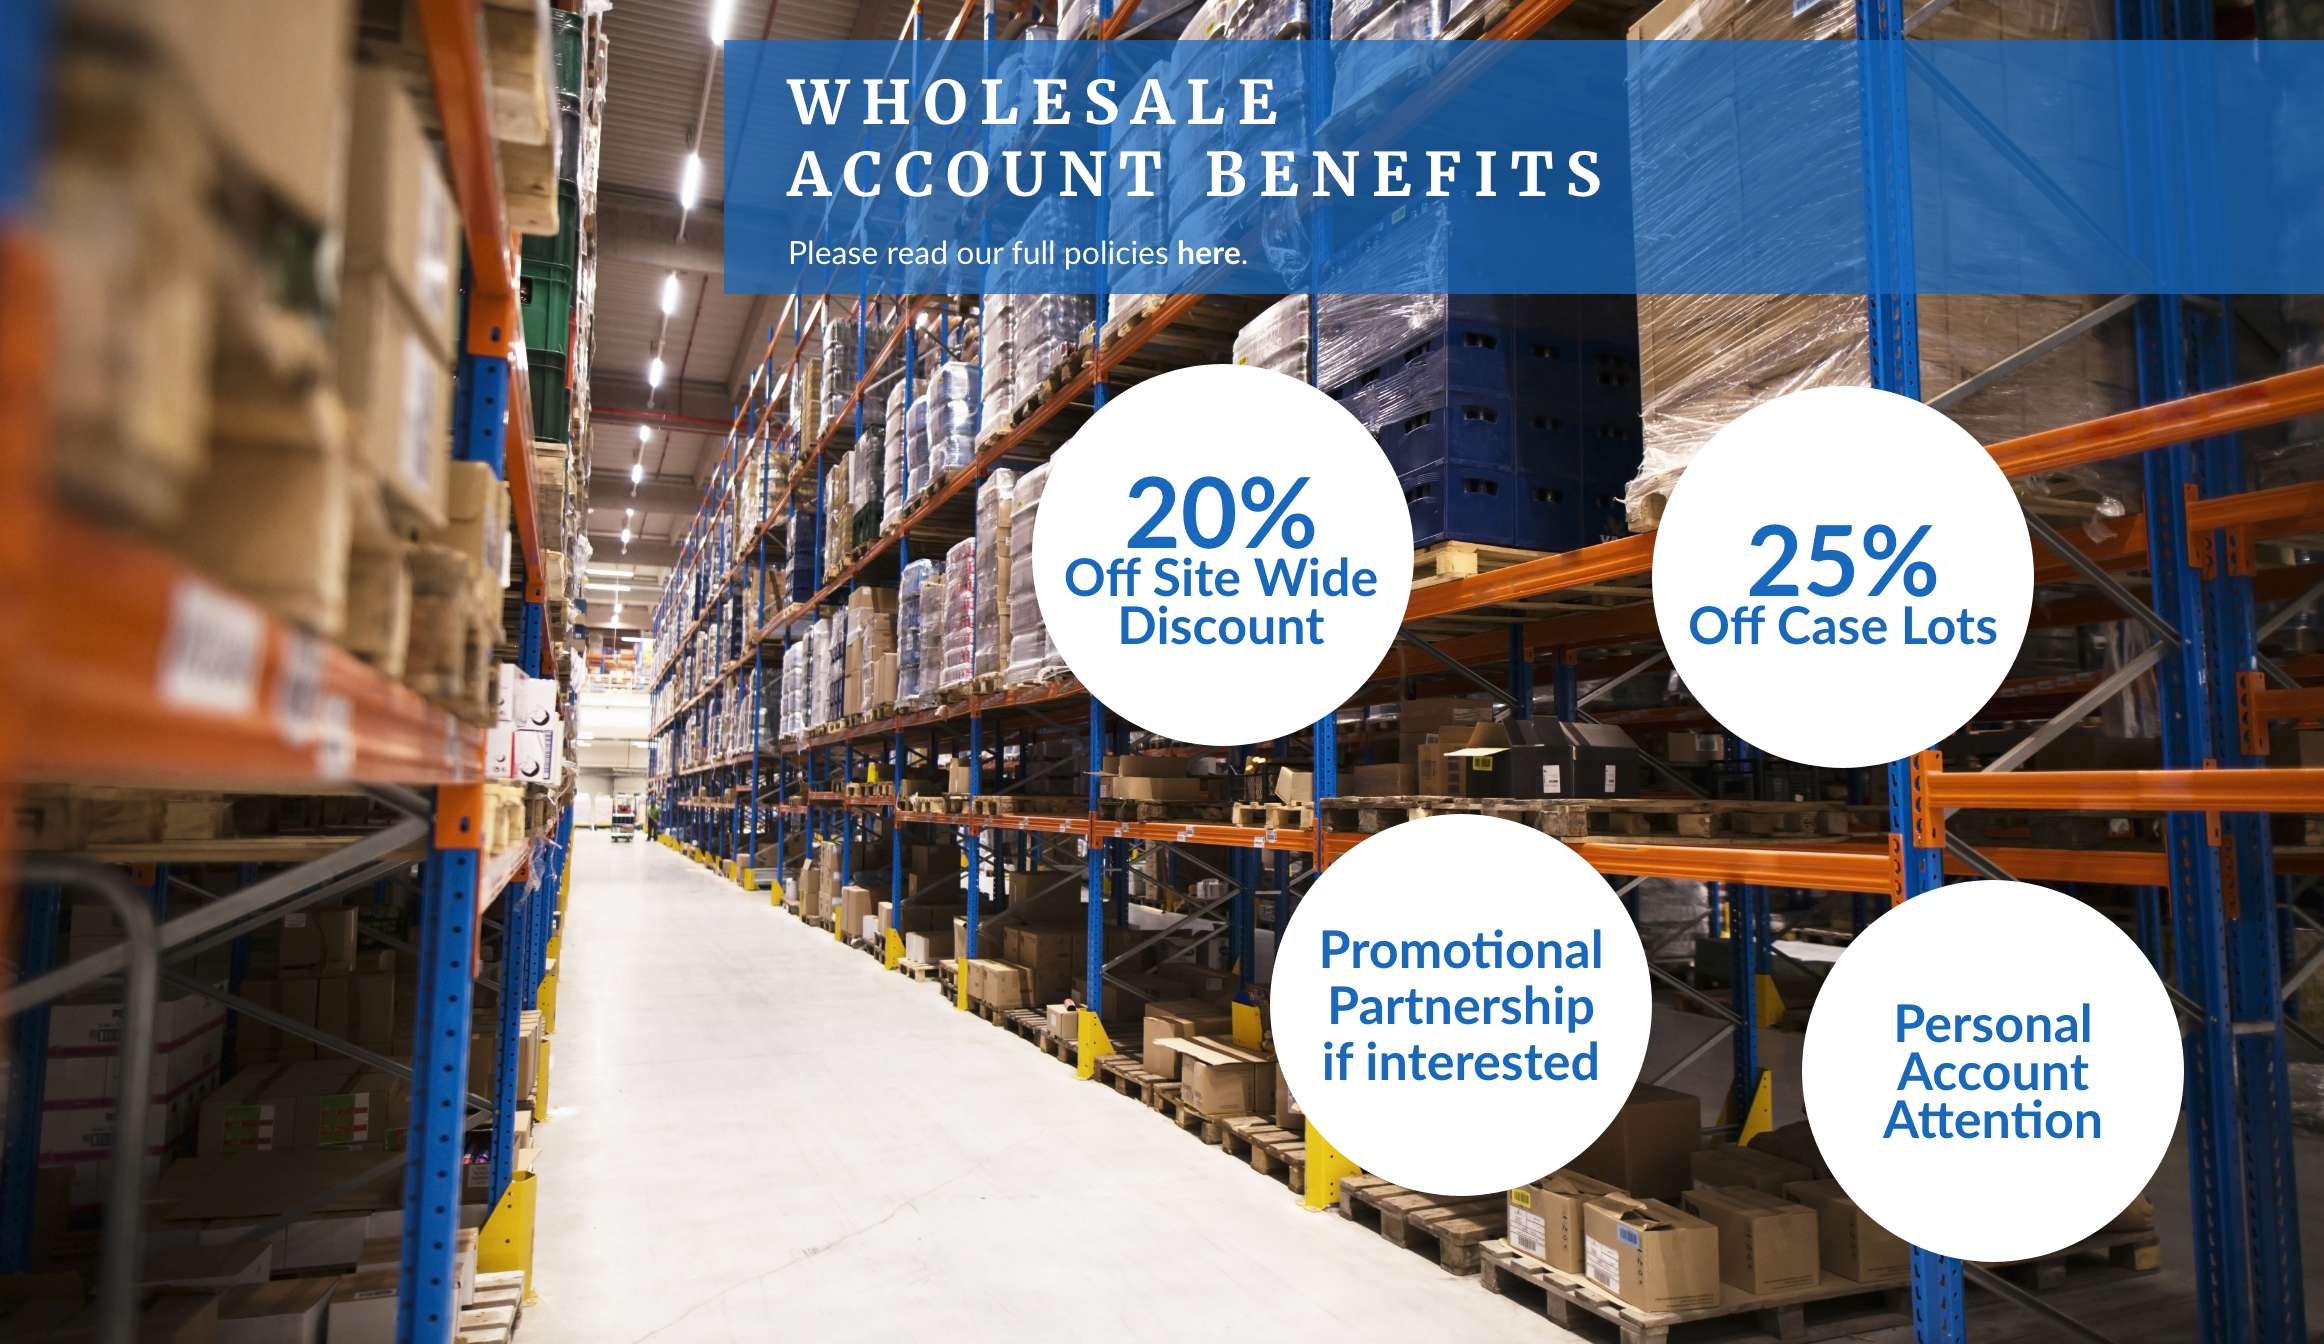 Wholesale Account Benefits